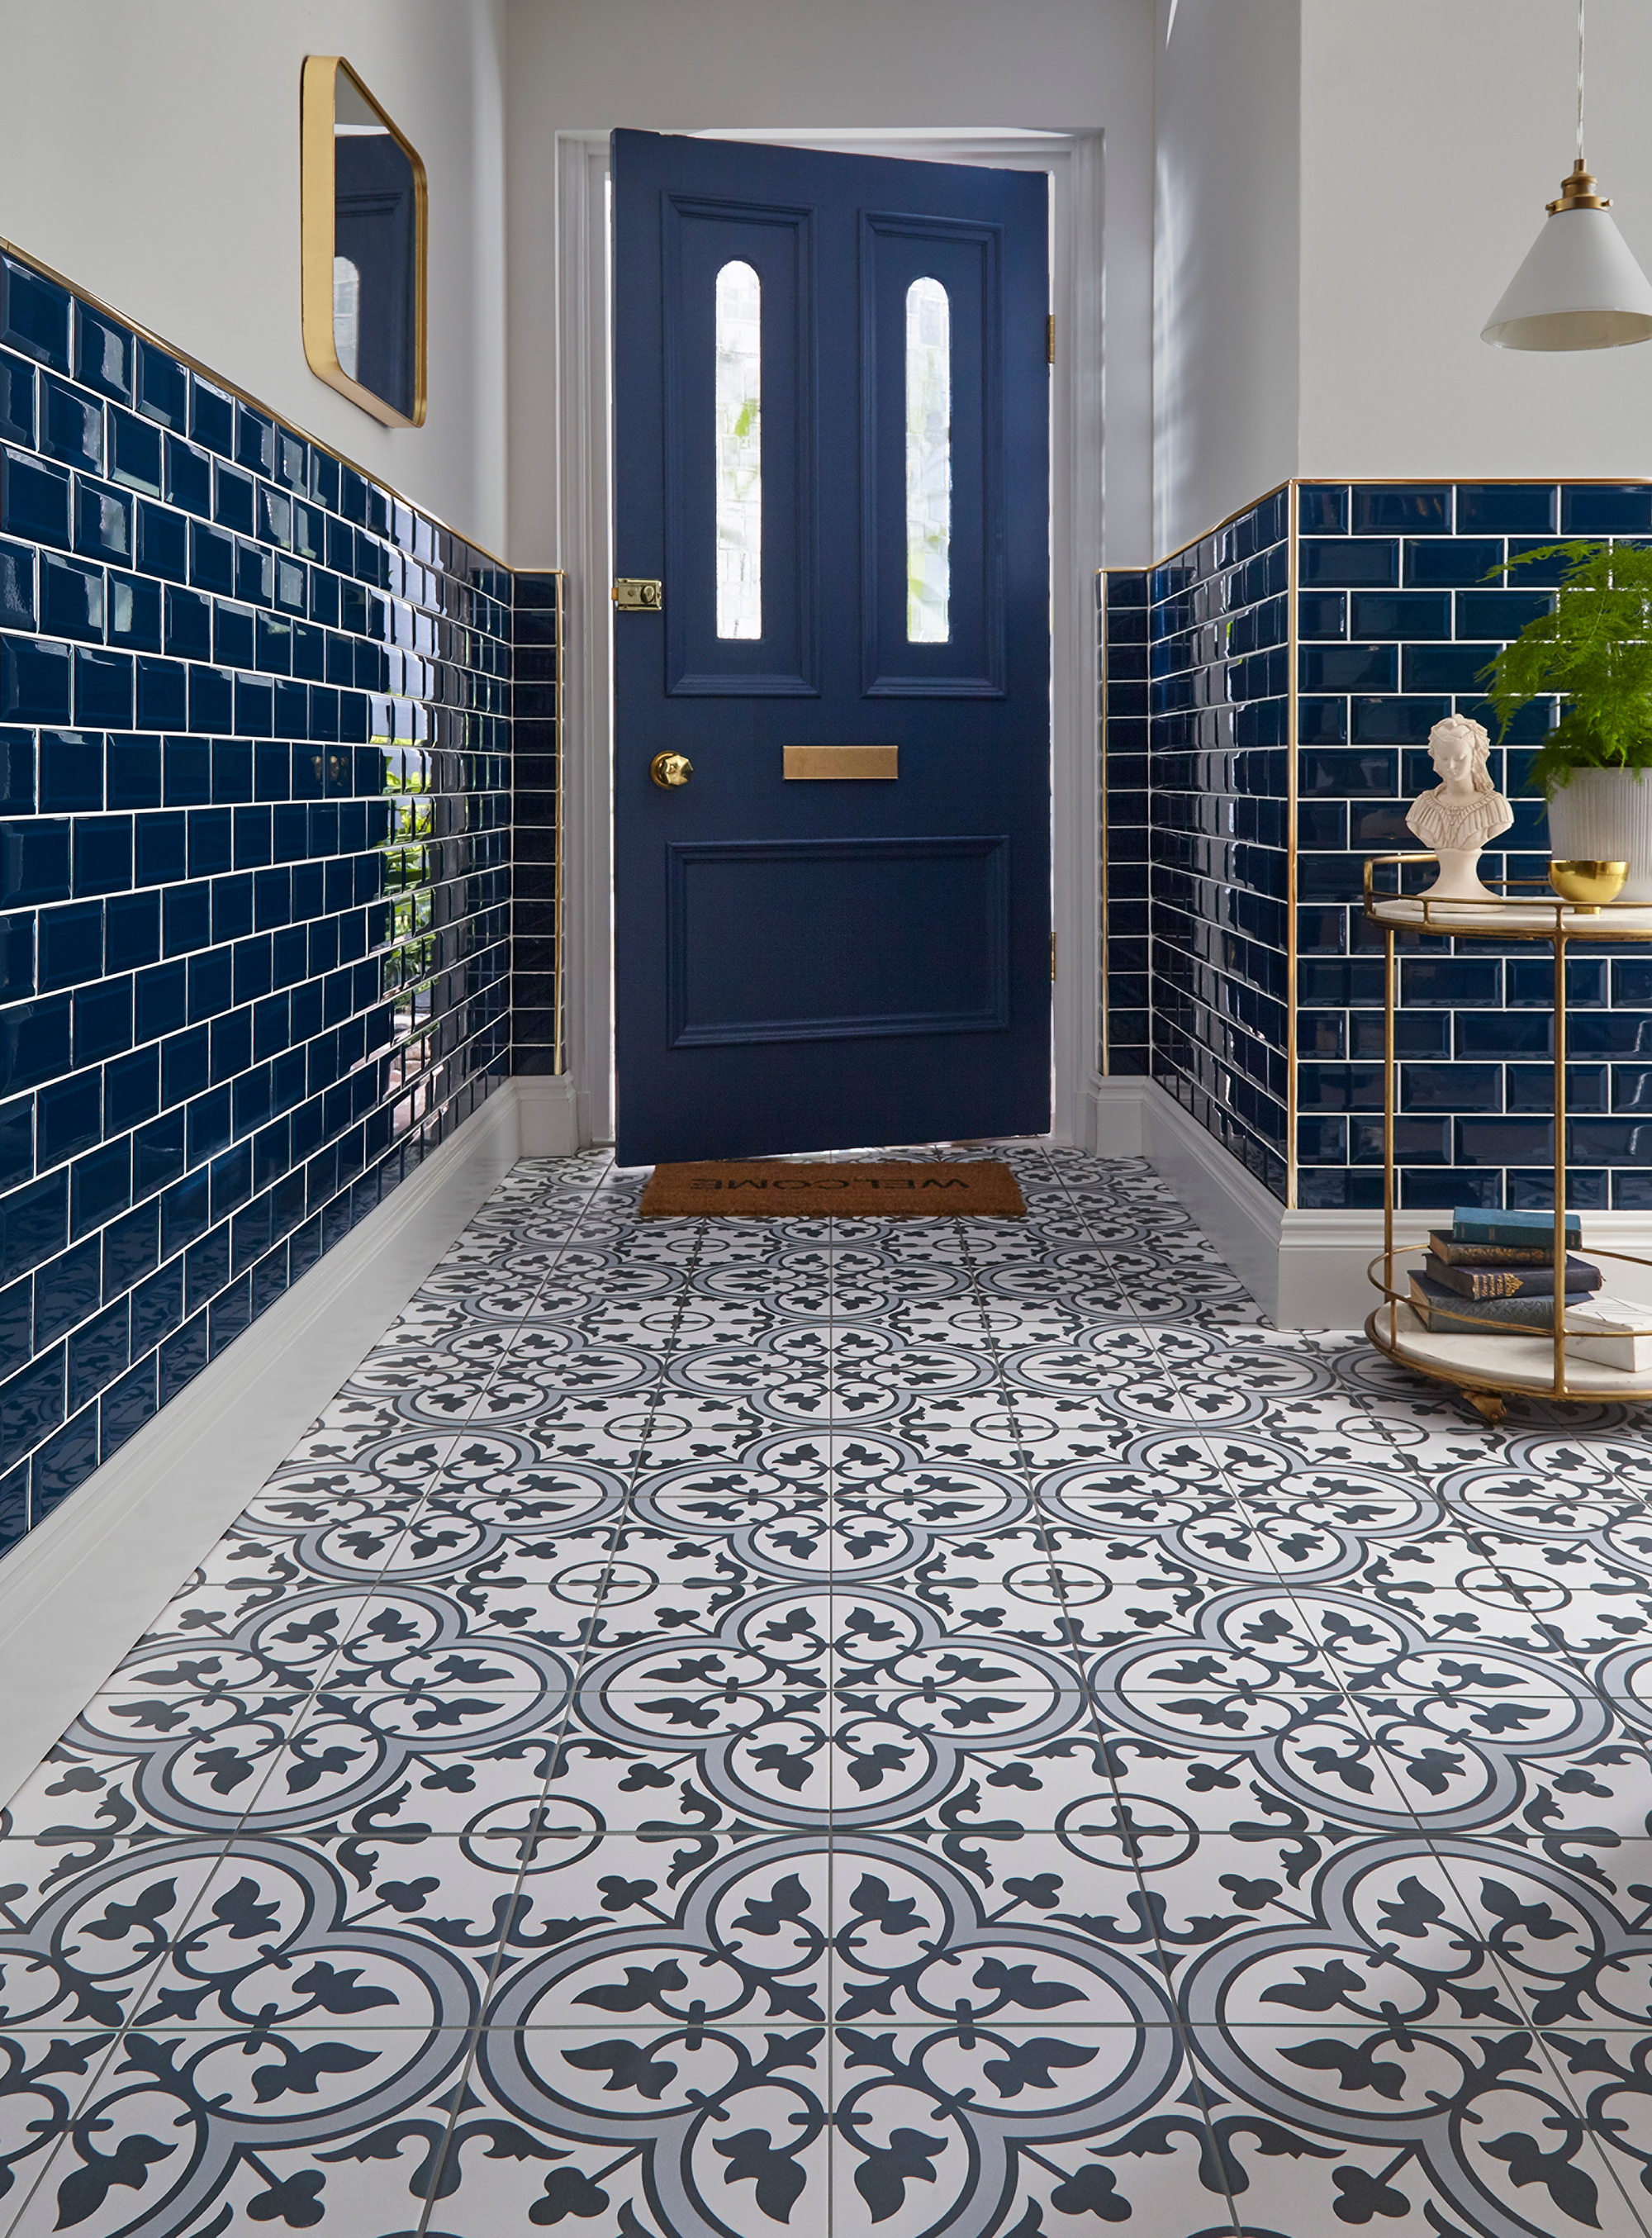 Hallway with ceramic tiles